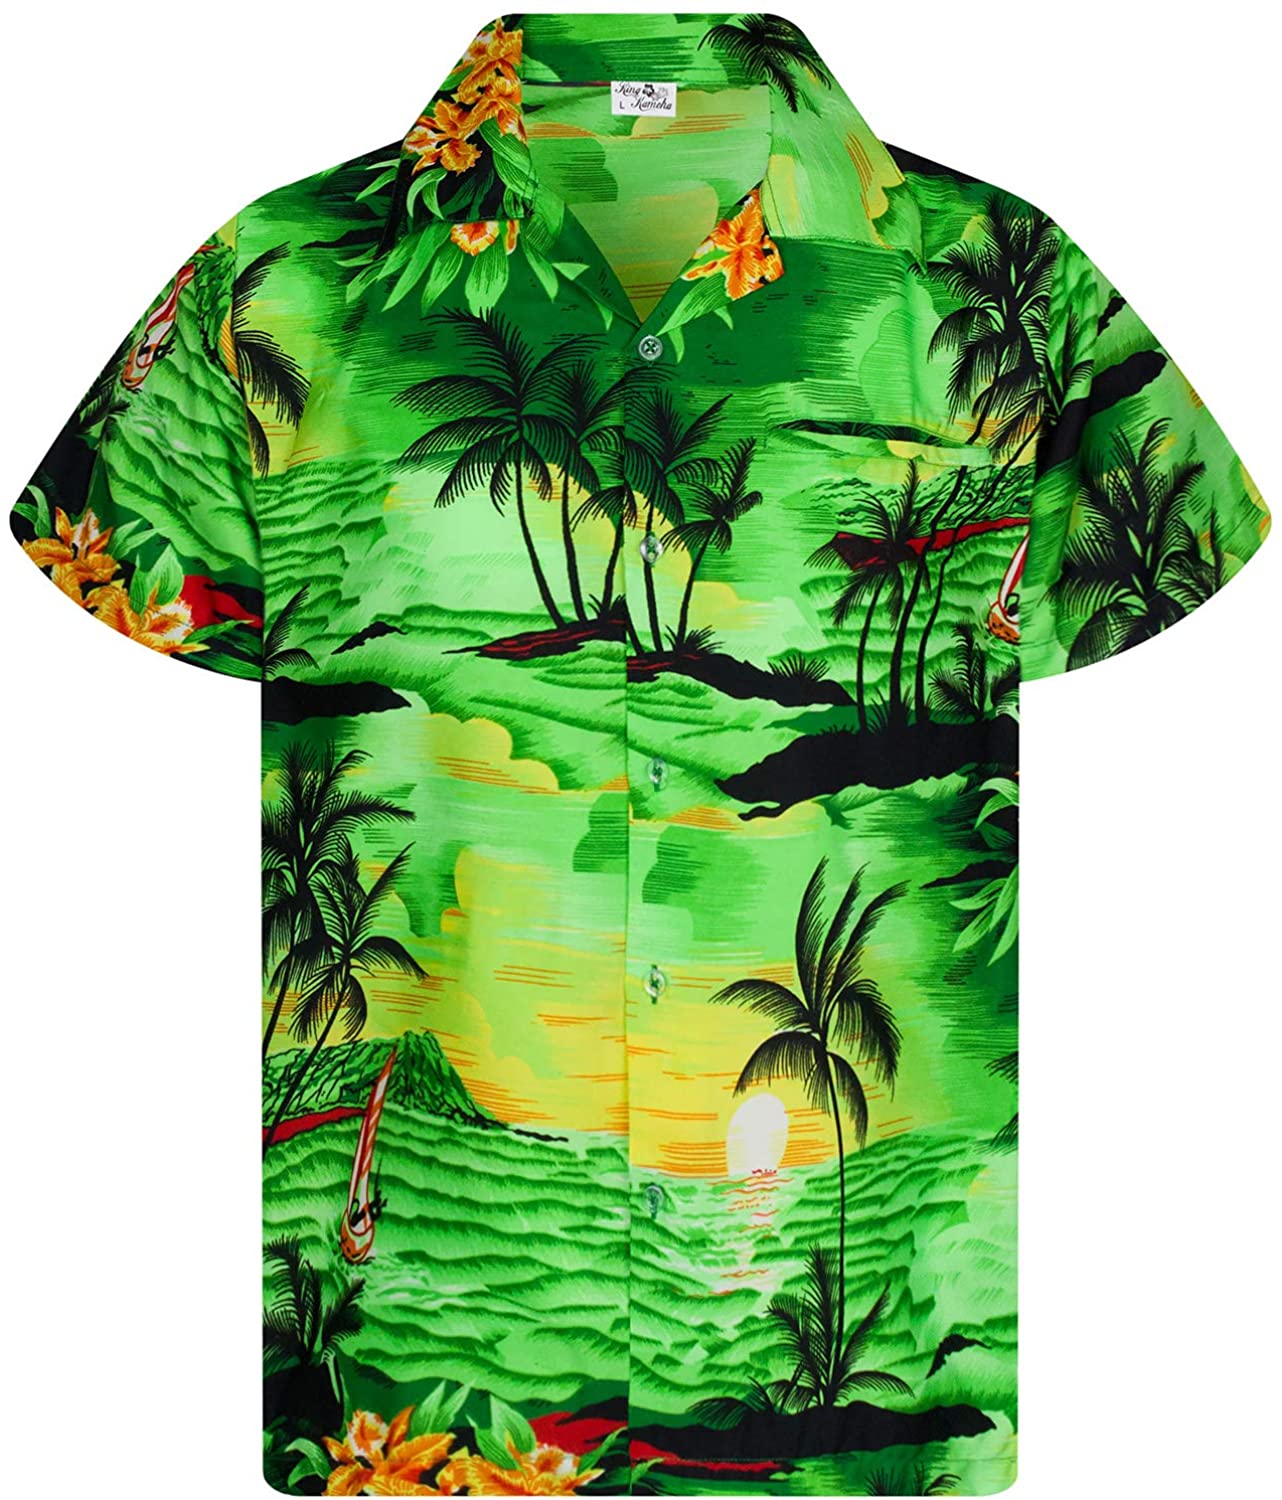 King Kameha Funky Casual Hawaiian Shirt for Kids Boys and Girls Front Pocket Very Loud Shortsleeve Unisex Surf Print 2-14 Years 